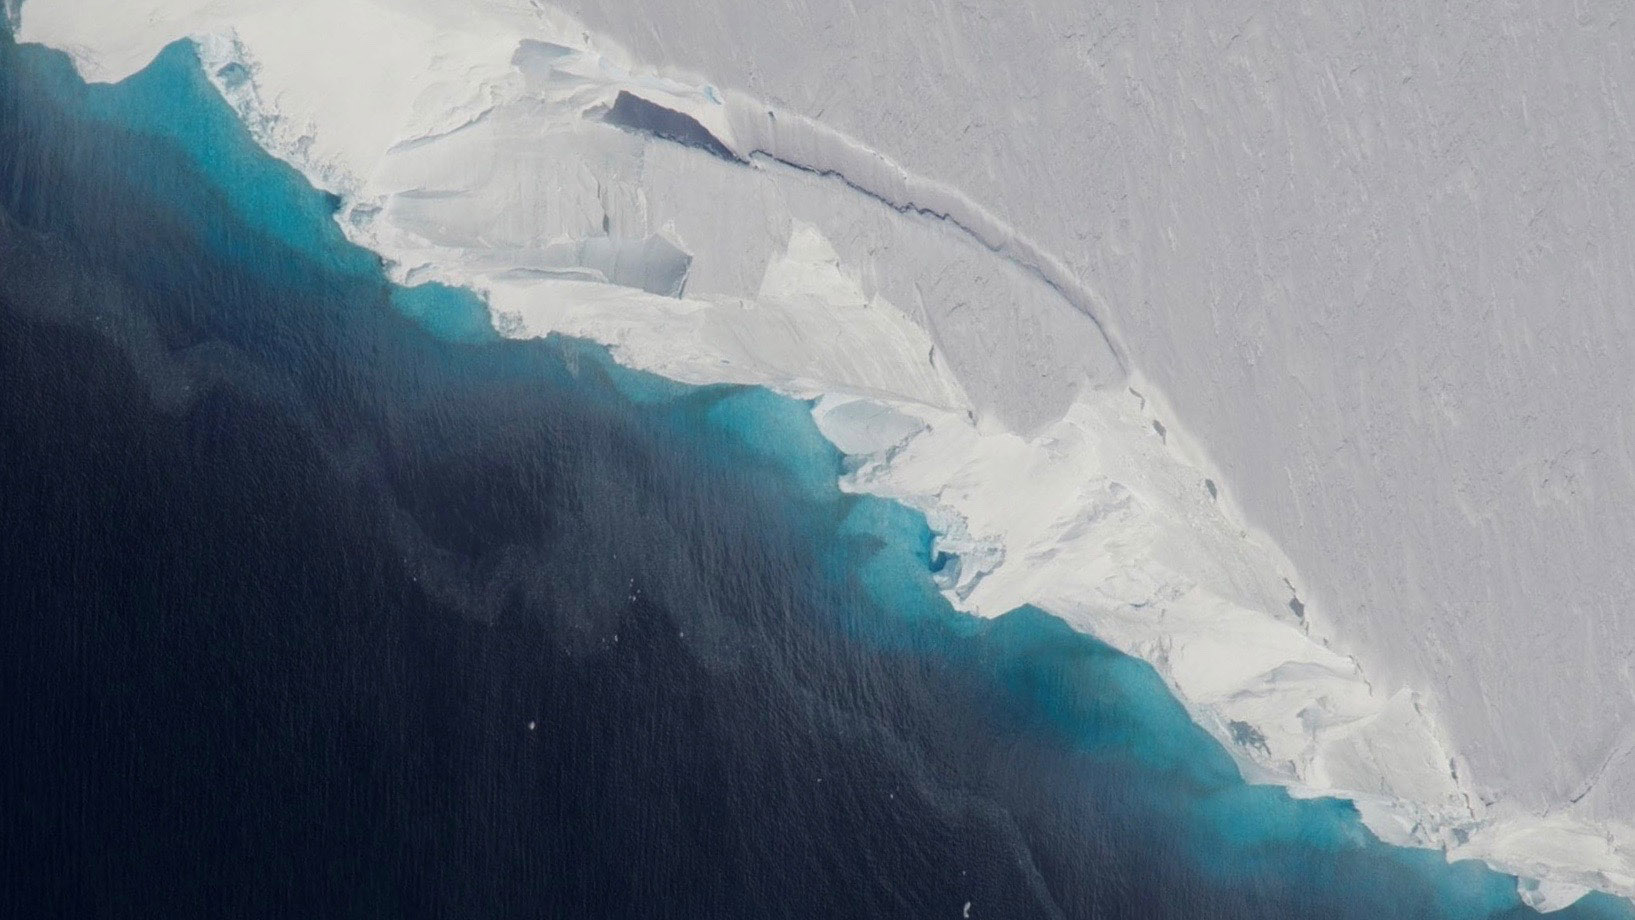 Thwaites Glacier in West Antarctica. (NASA/OIB/Jeremy Harbeck)